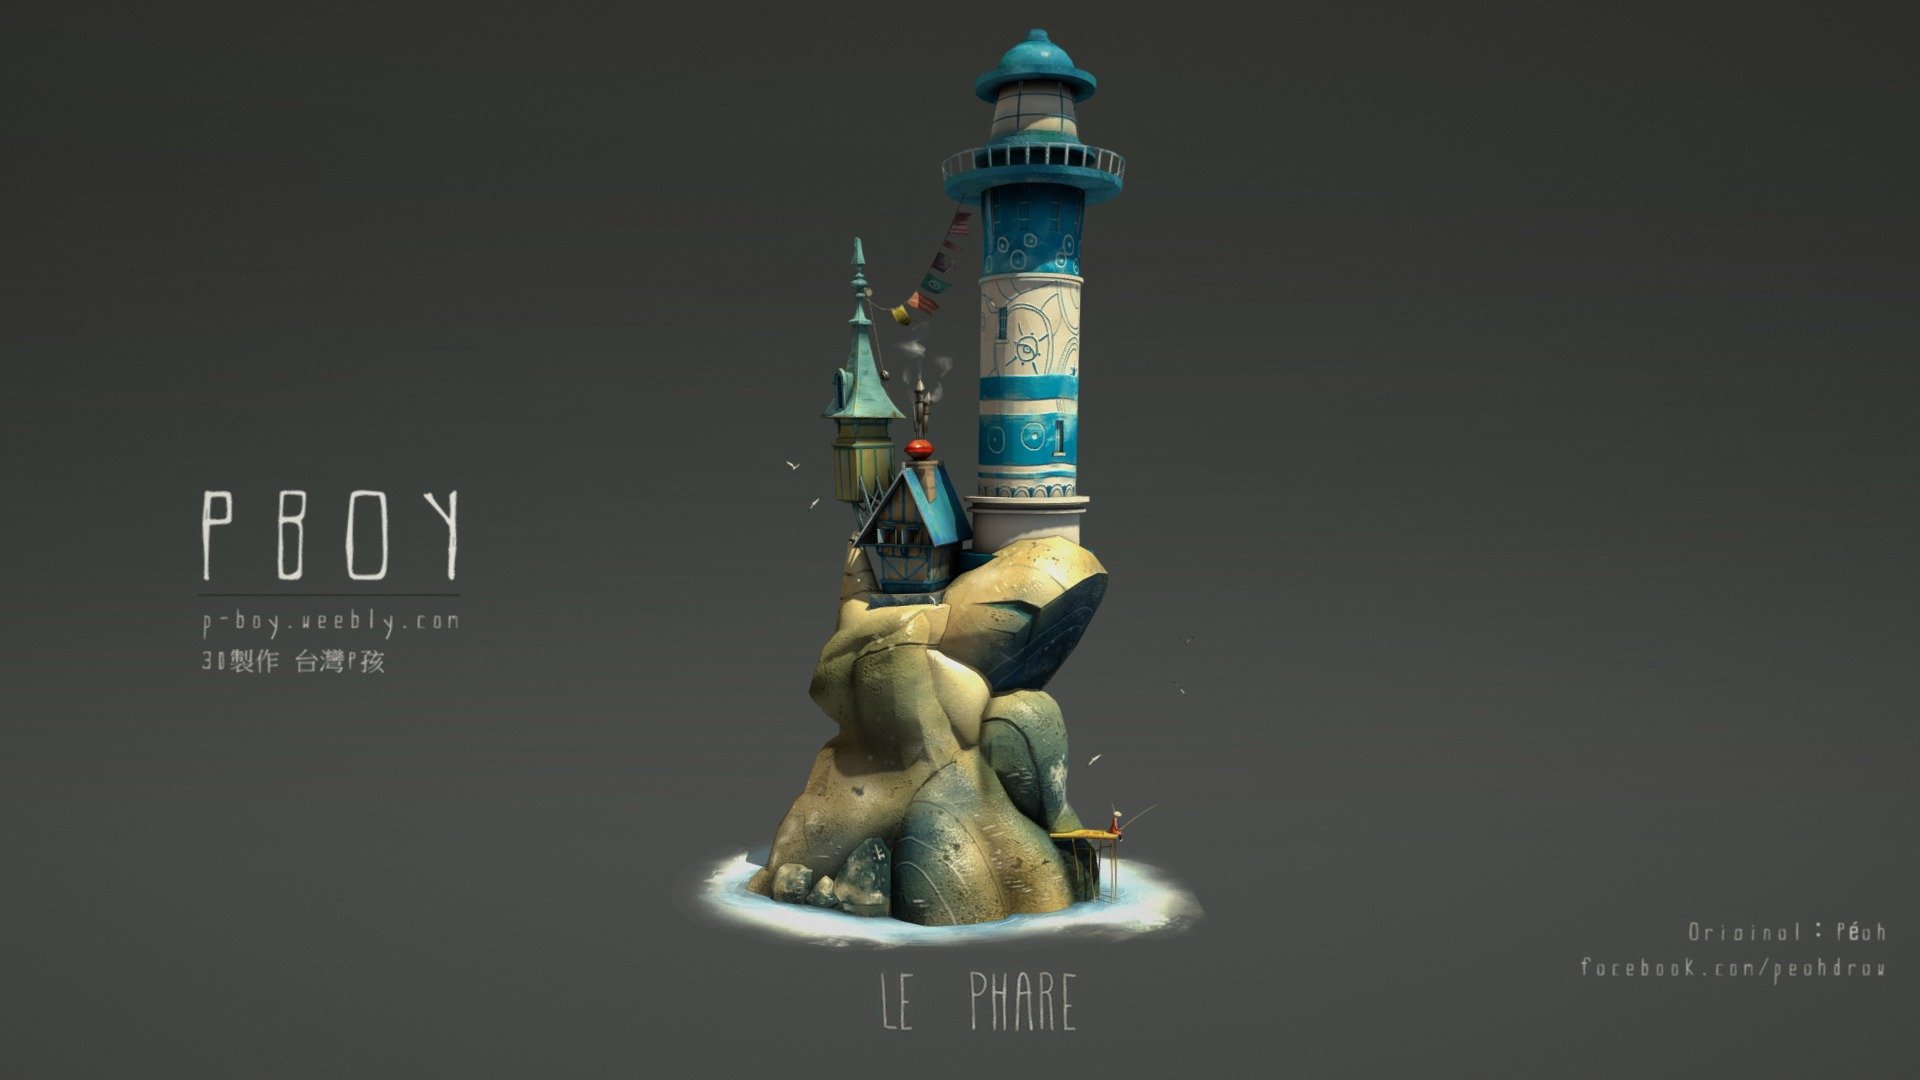 3D Lighthouse ：PBOY
2D Original：Péah 
https://www.facebook.com/peahdraw - 小燈塔 LE PHARE - 3D model by 首都人 SODOREN (@pboy) 3d model